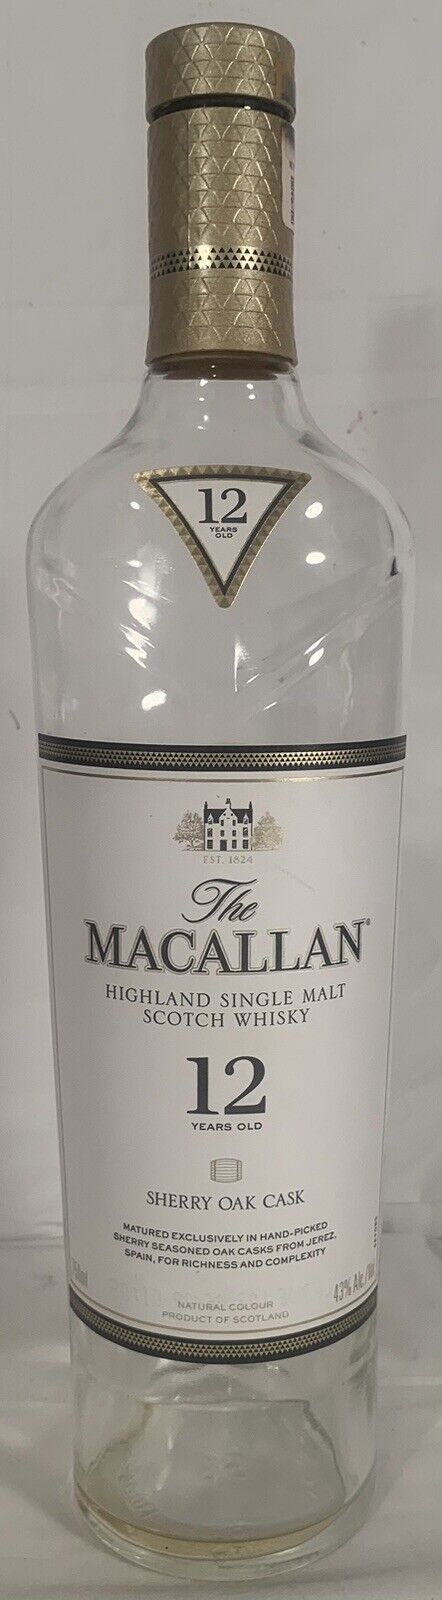 Macallan 12 Year SHERRY OAK CASK Highland Single Malt Scotch Whisky EMPTY bottle